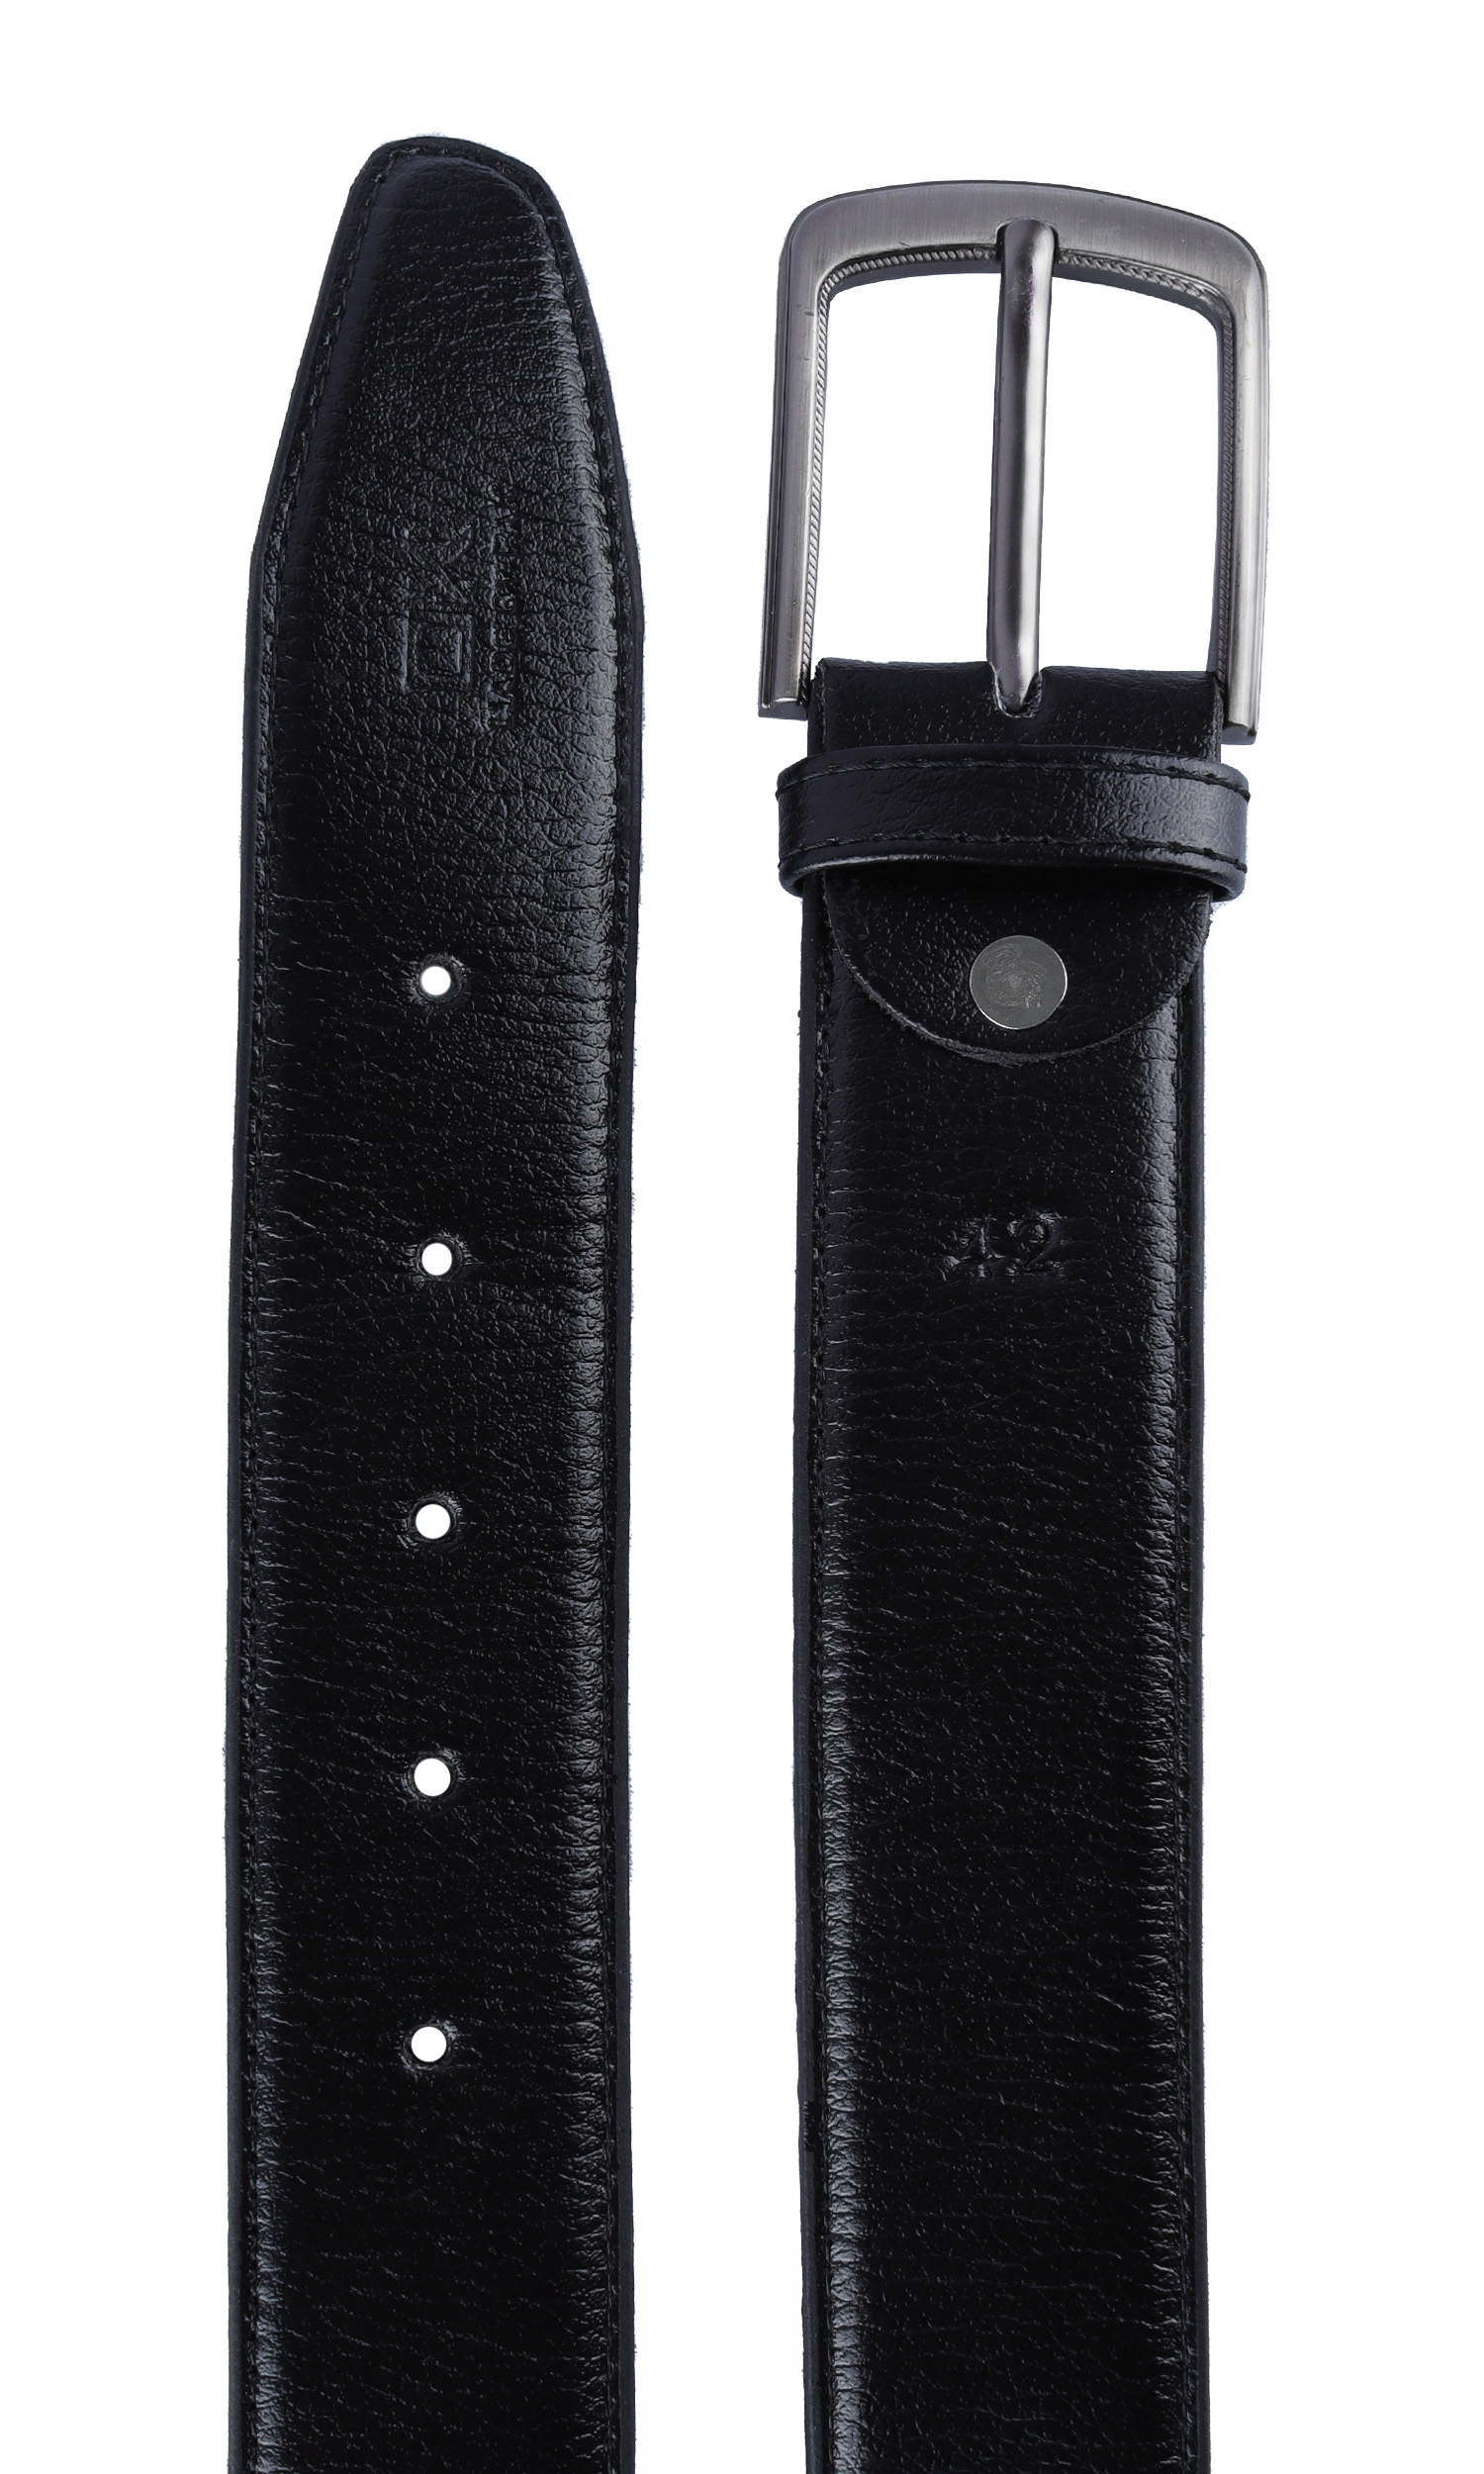 Leather black Belt for Men's in 2 Styles